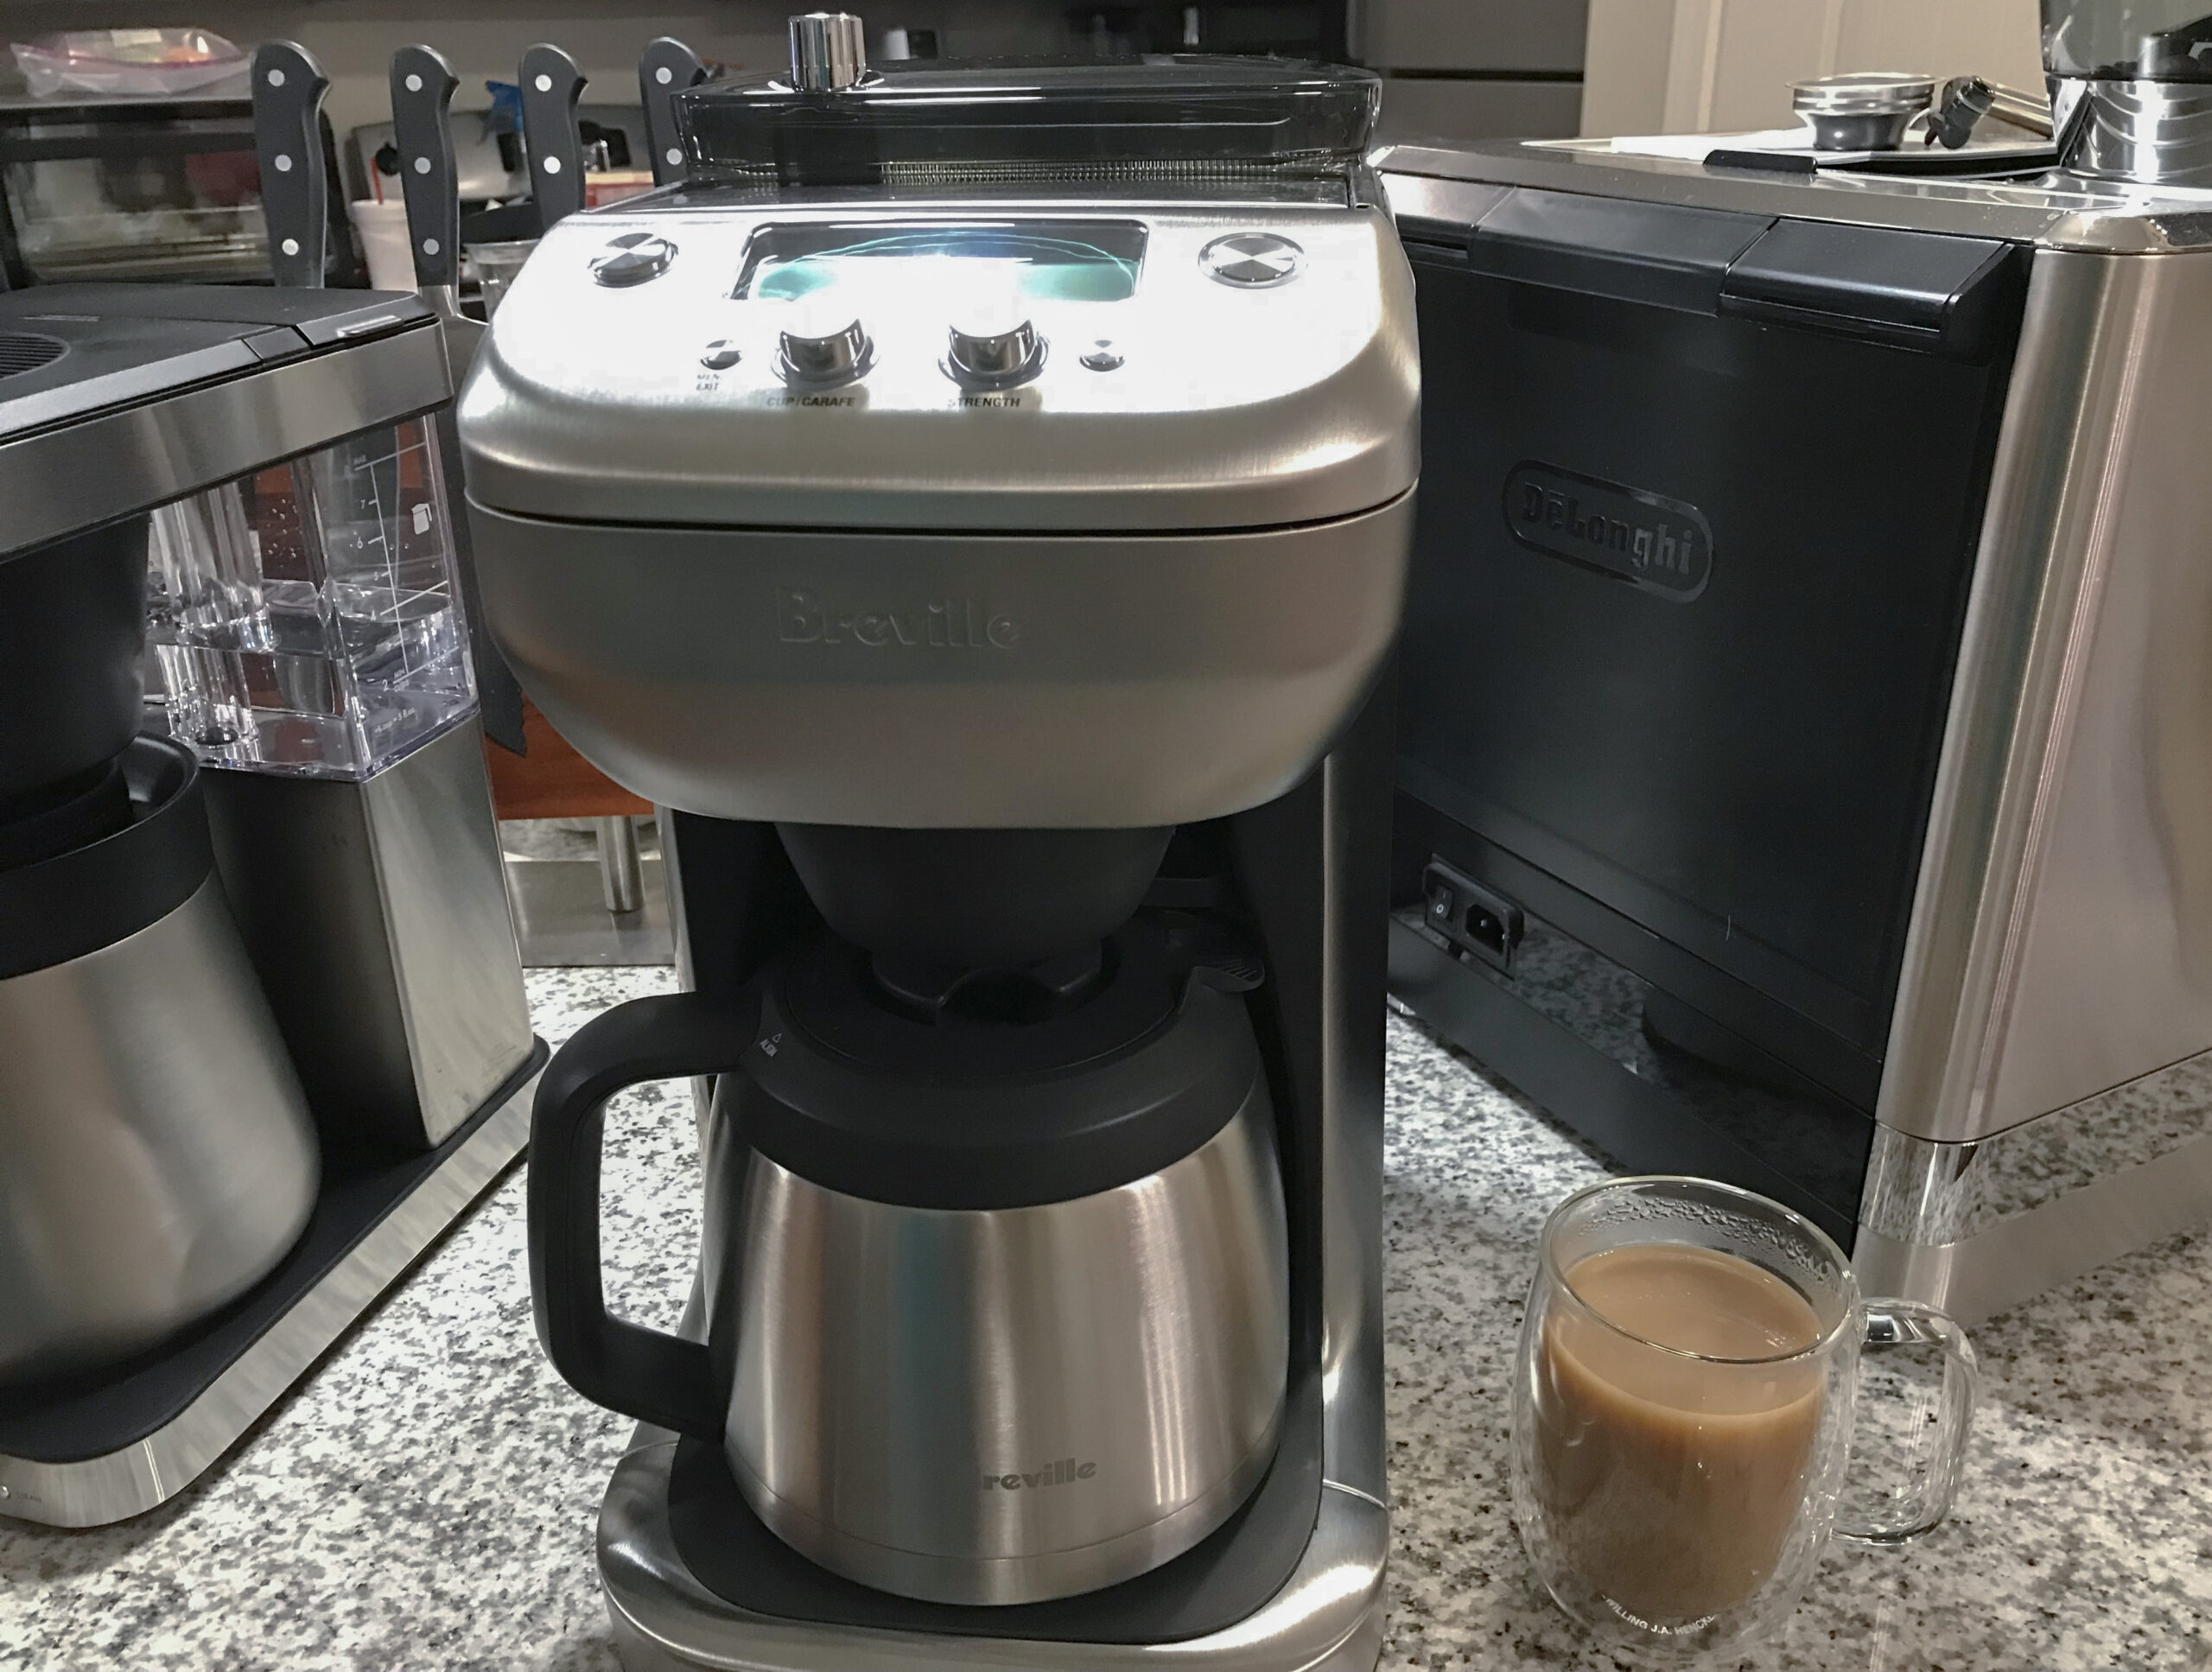 Breville Grind Control Coffee Maker